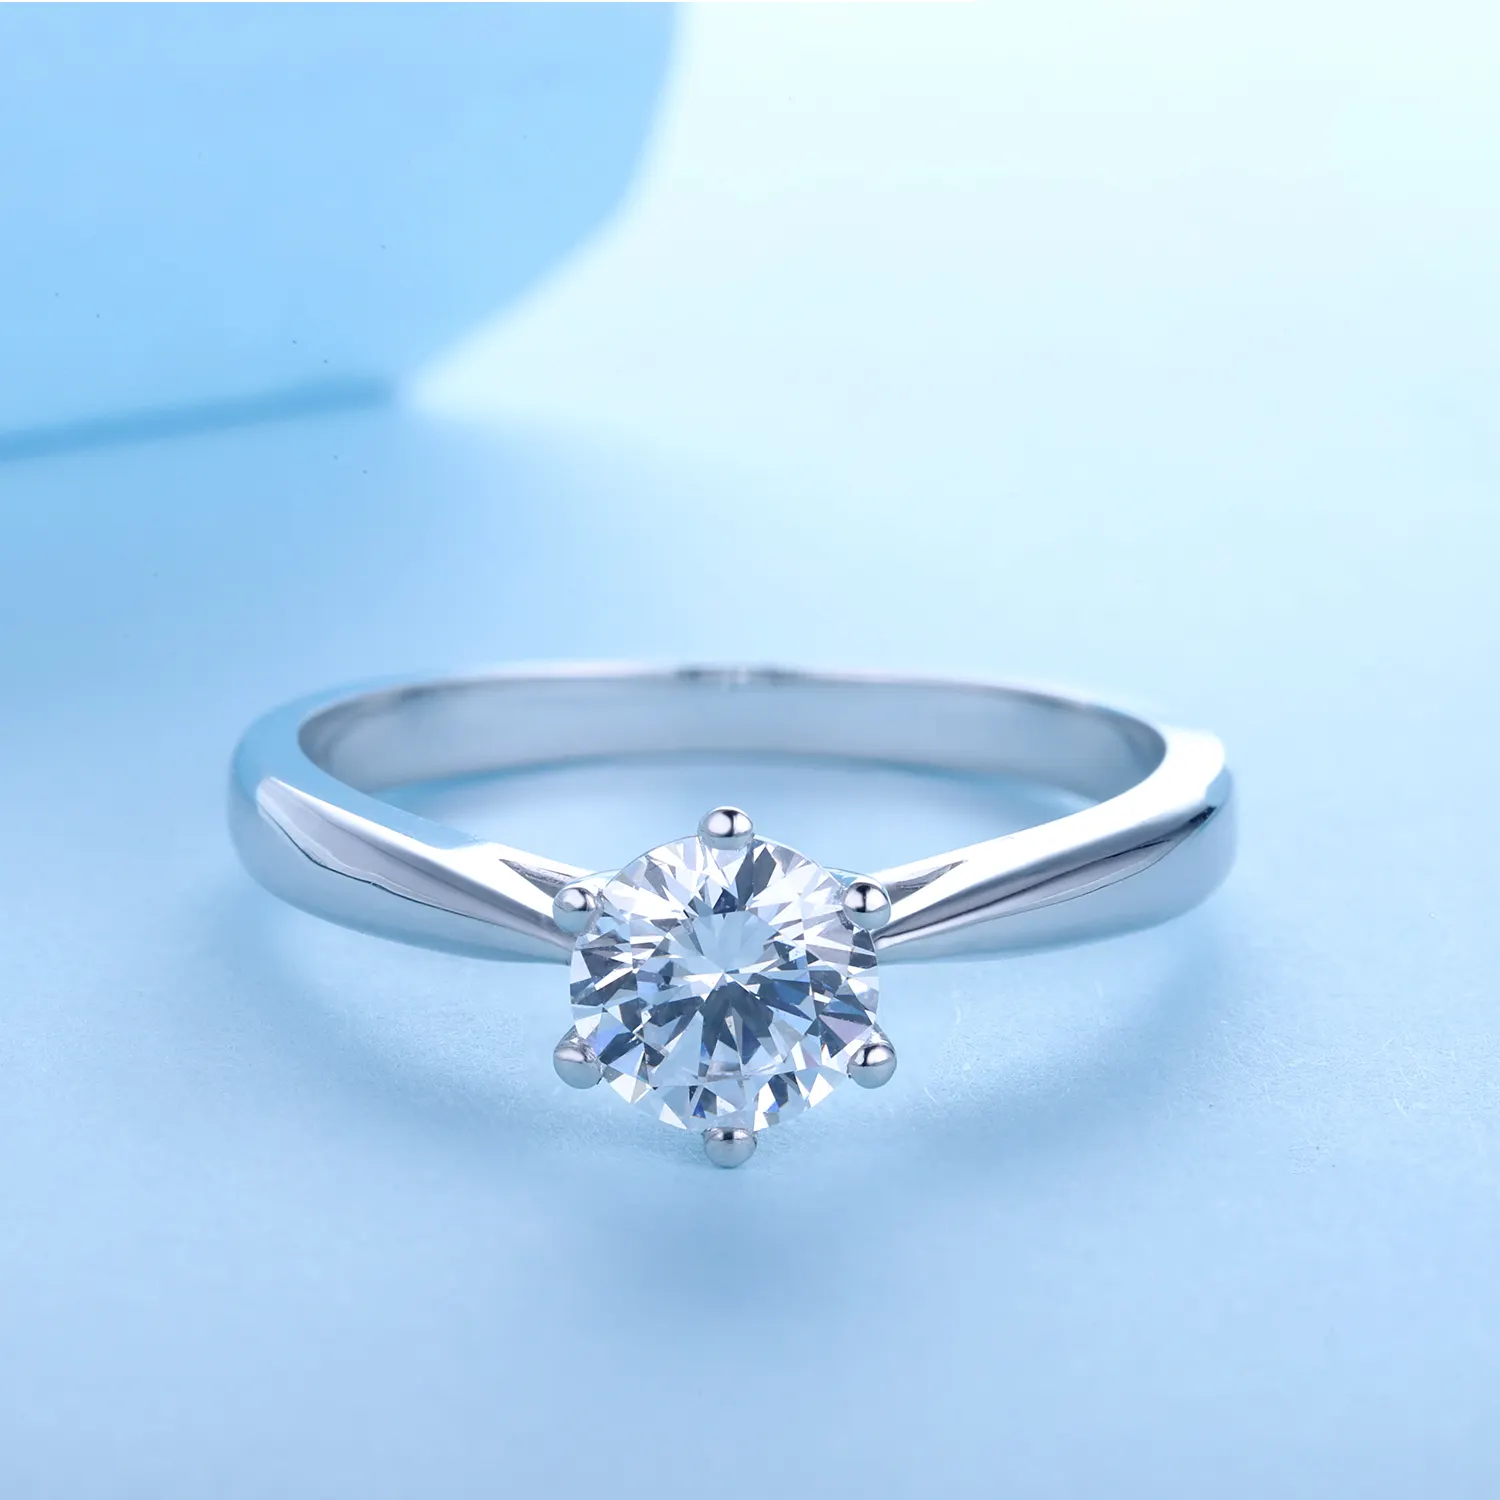 Classic style engagement ring wedding ring IGI certificate 18k gold 0.3 ct lab grown HPHT CVD diamond rings